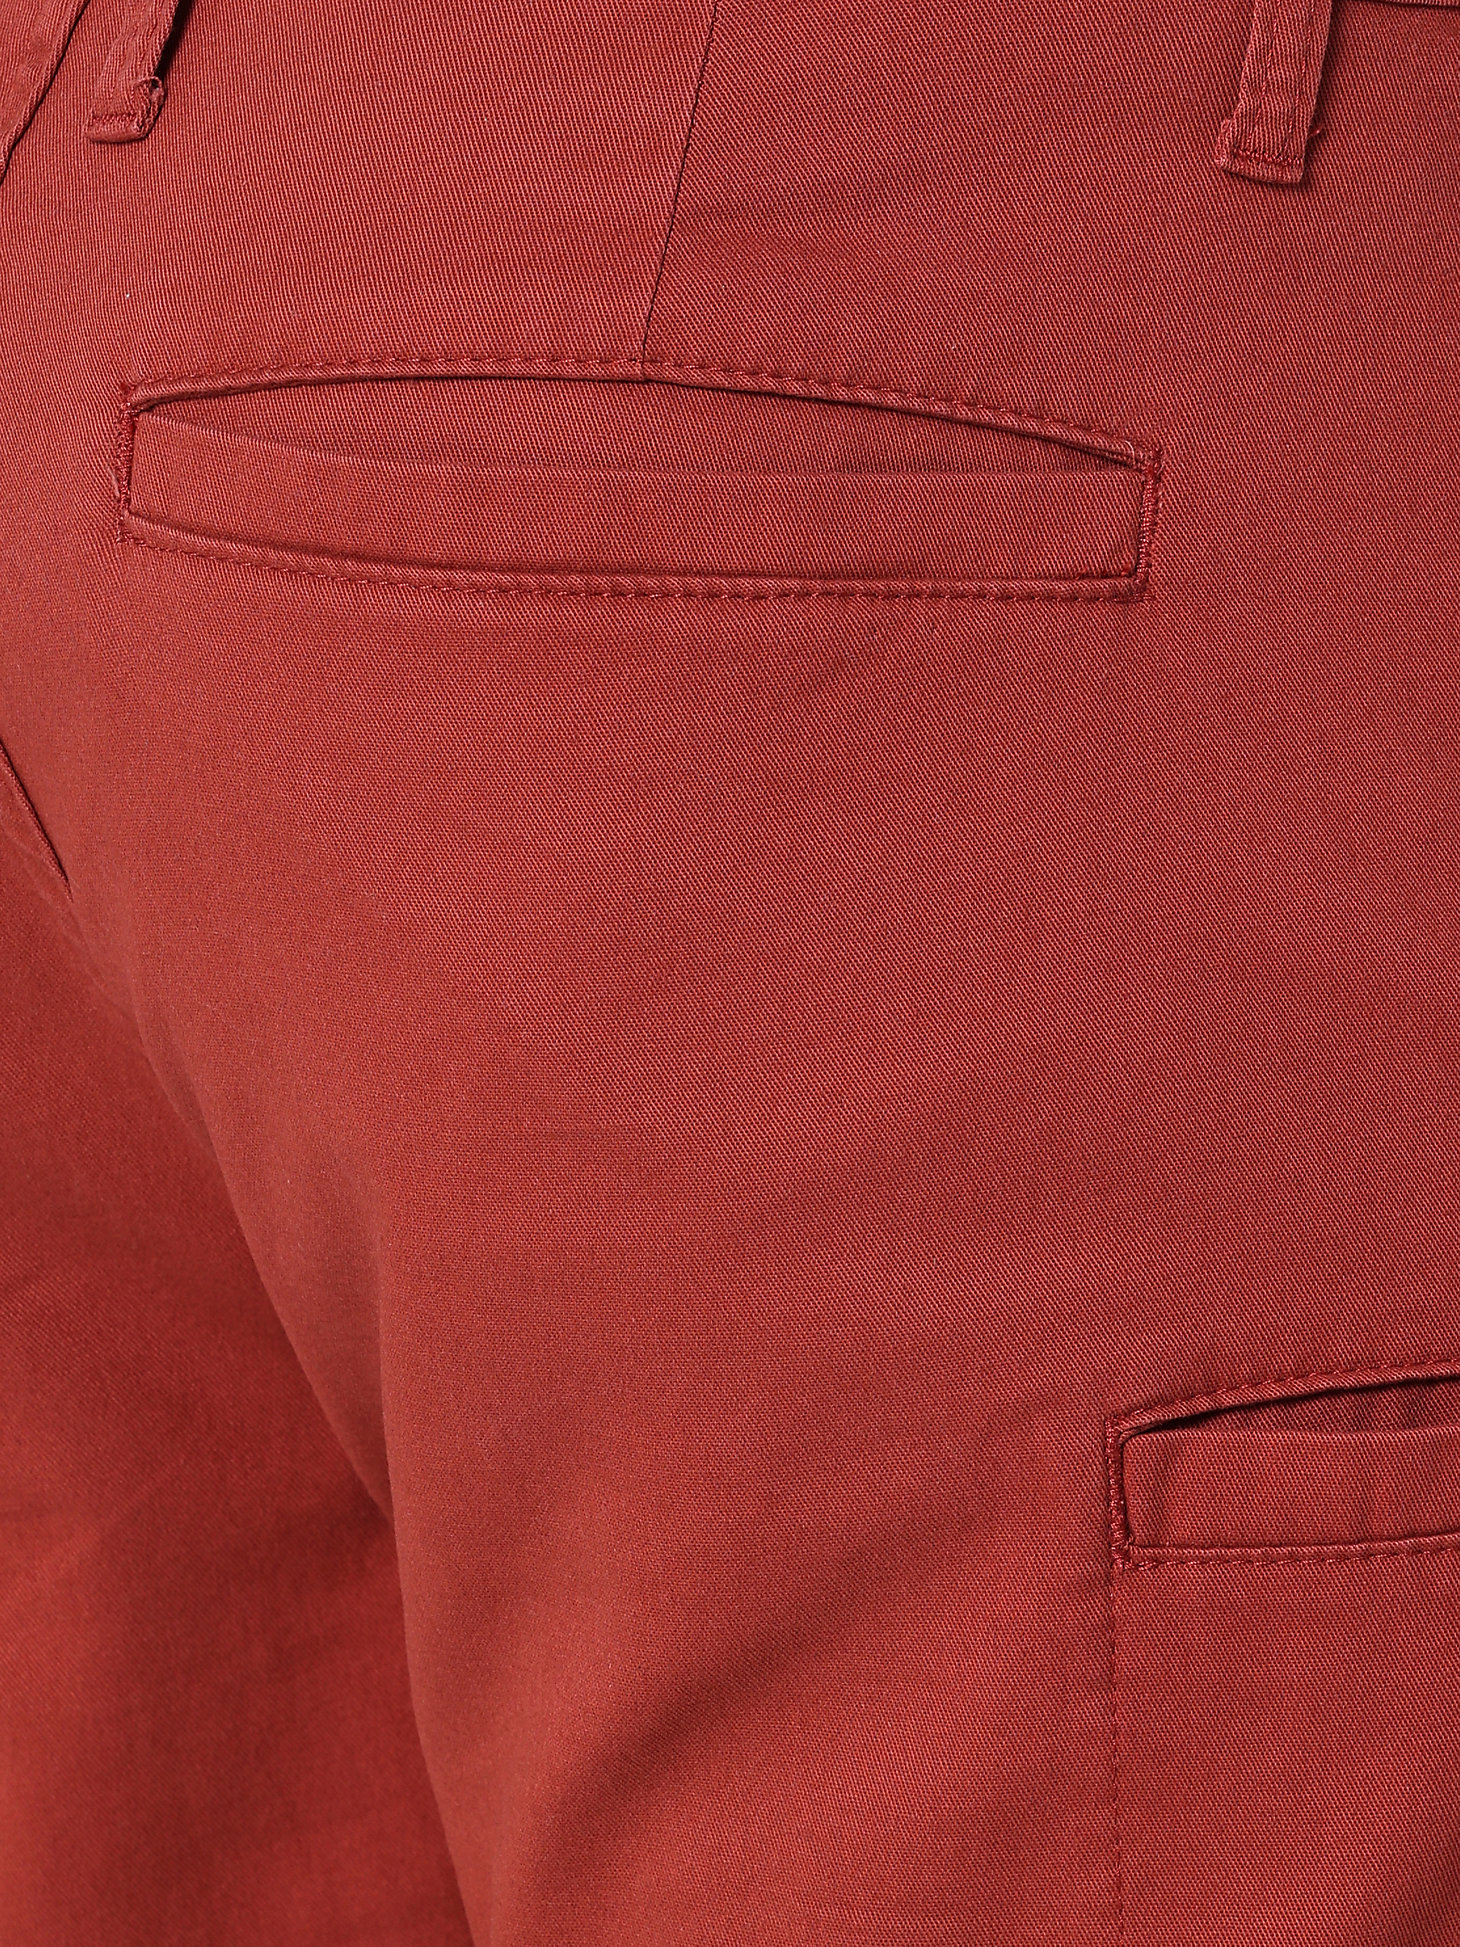 Wrangler Rugged Wear® Flat Front Chino Short in Dark Red alternative view 3